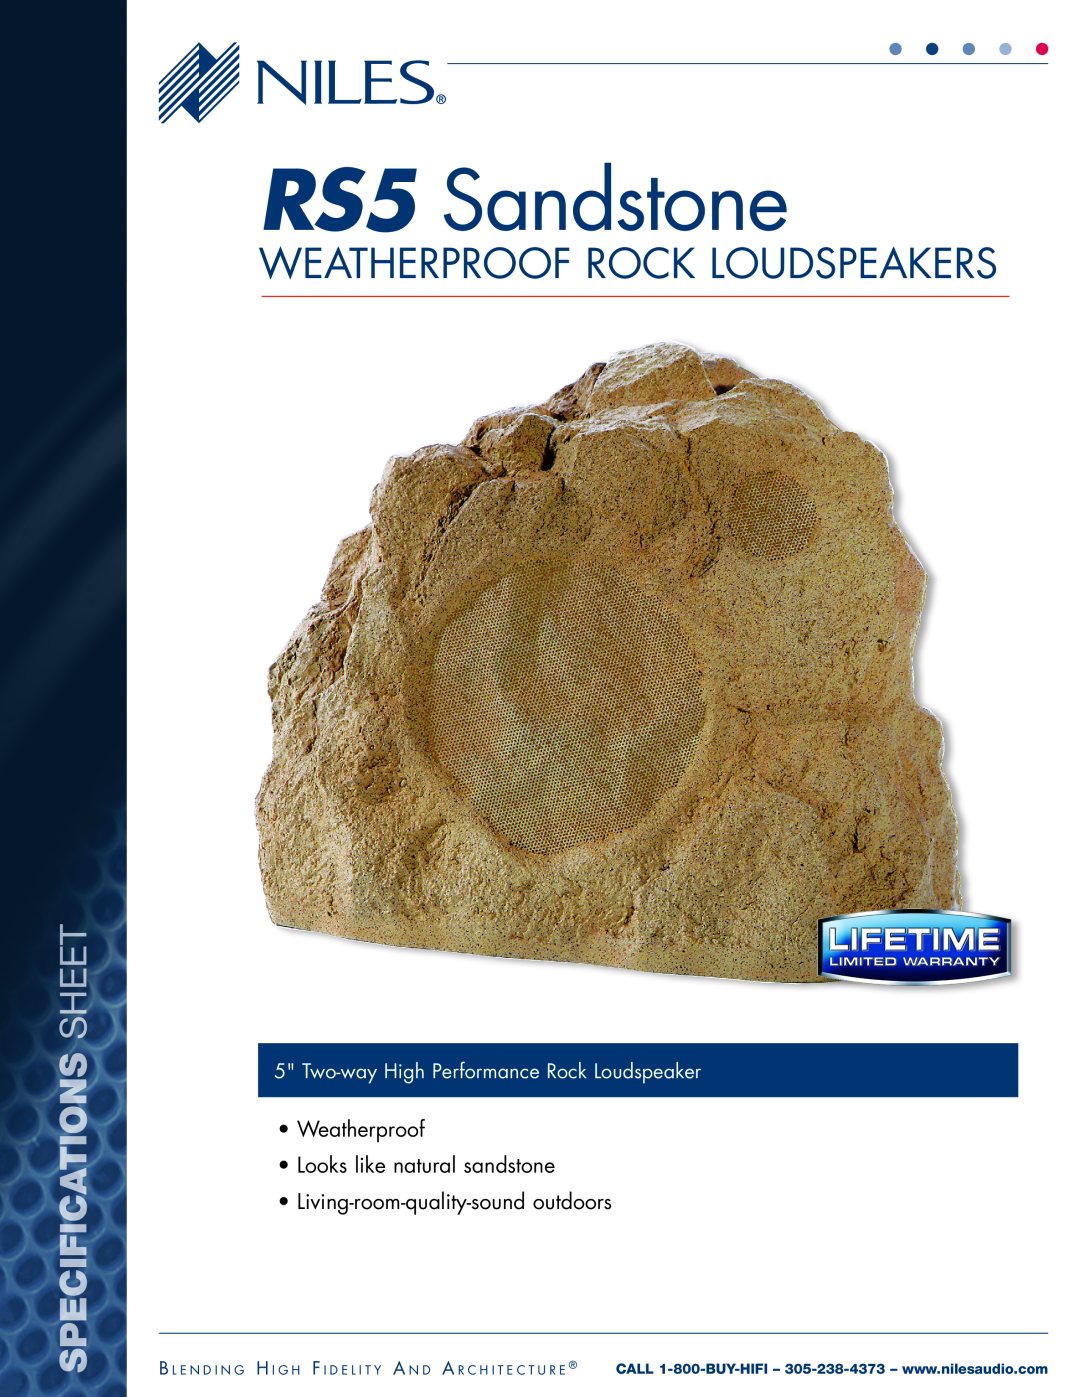 Niles Audio RS5 Sandstone specifications Specifications Sheet, weatherproof rock loudspeakers 